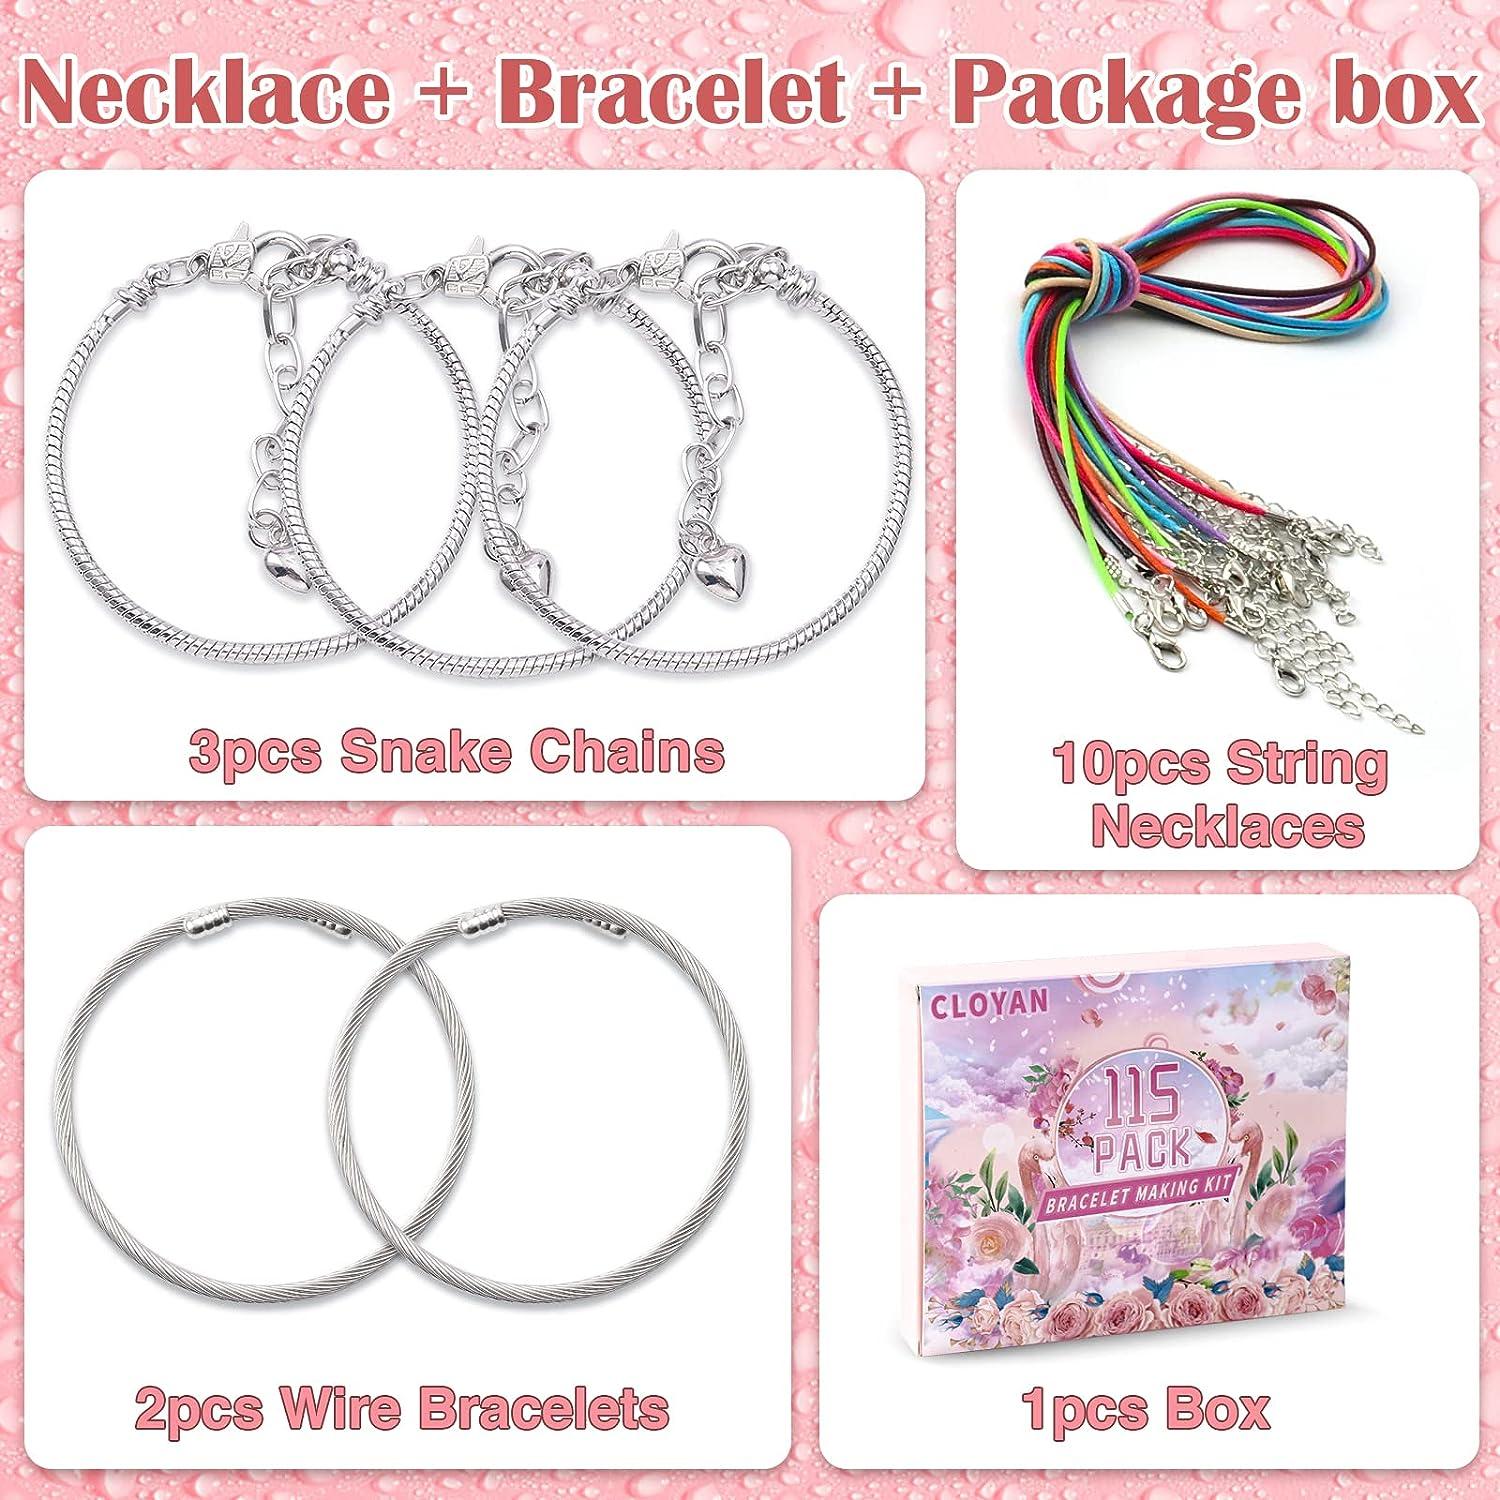 Girls Charm Bracelet Making Kit Craft Sets For Girls Ages 8-12